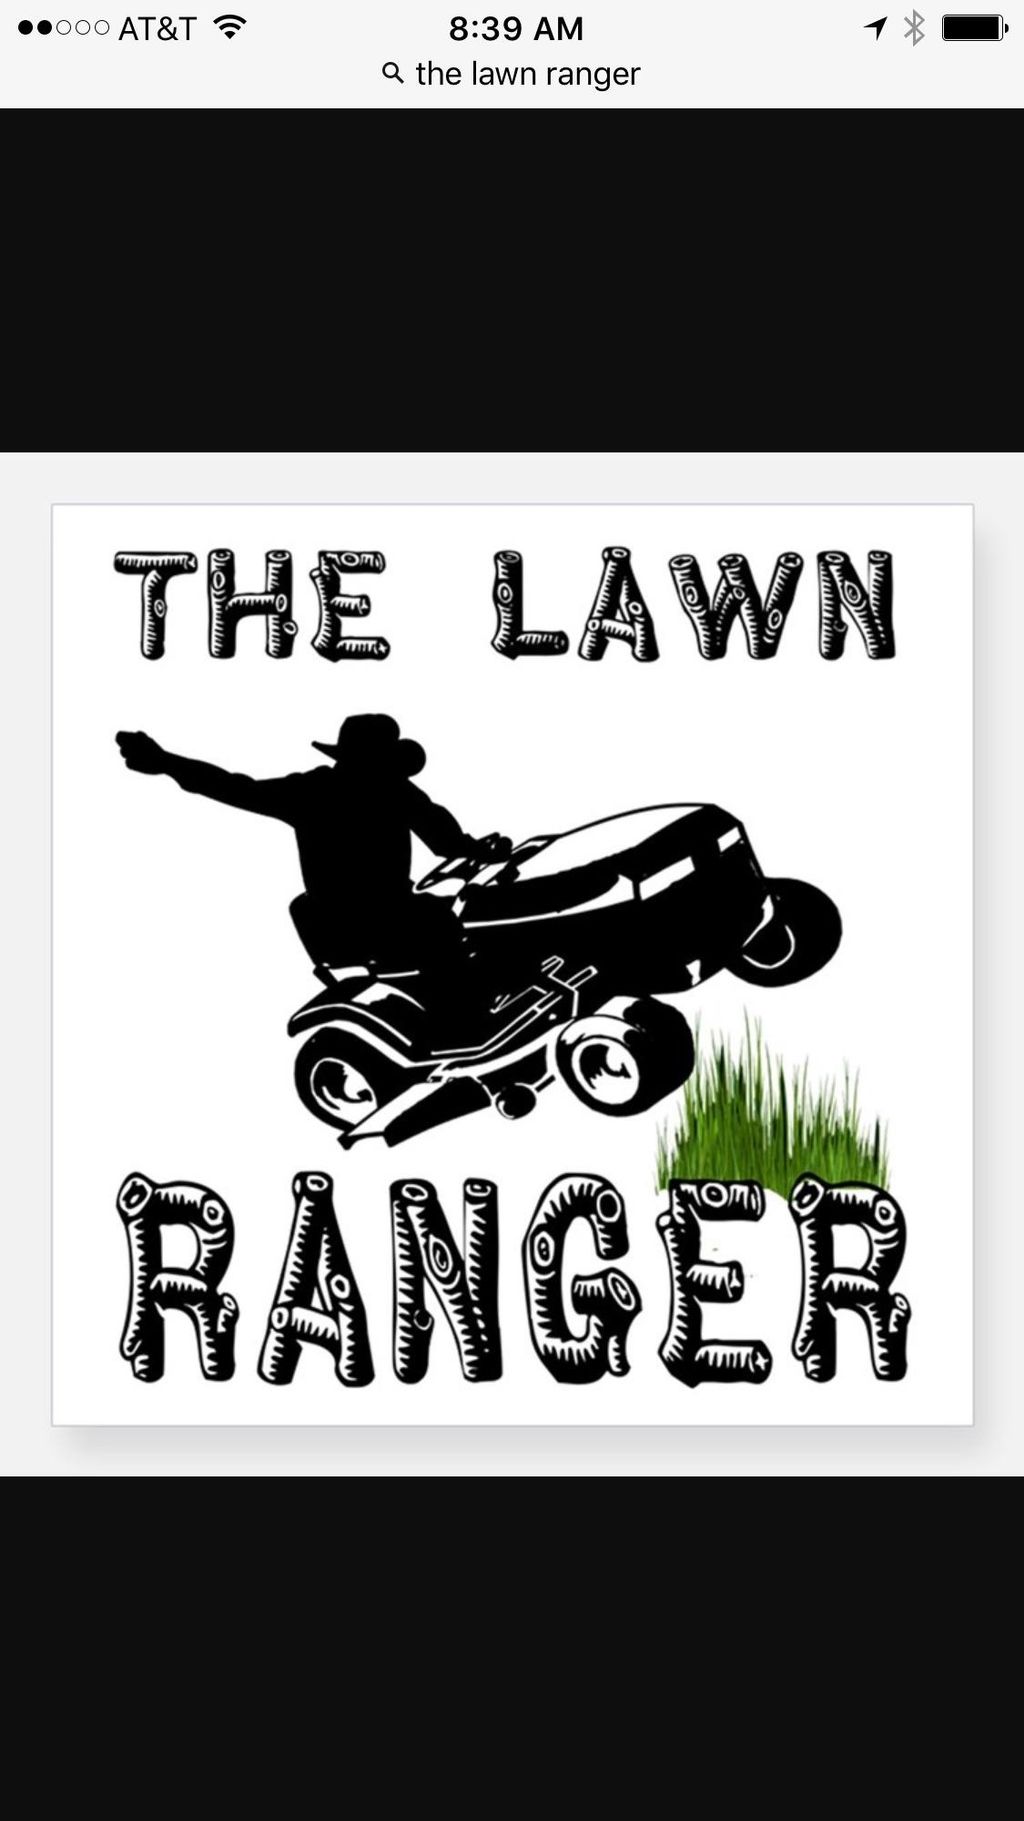 The Lawn Ranger Service “Mow grass. Mow probl...